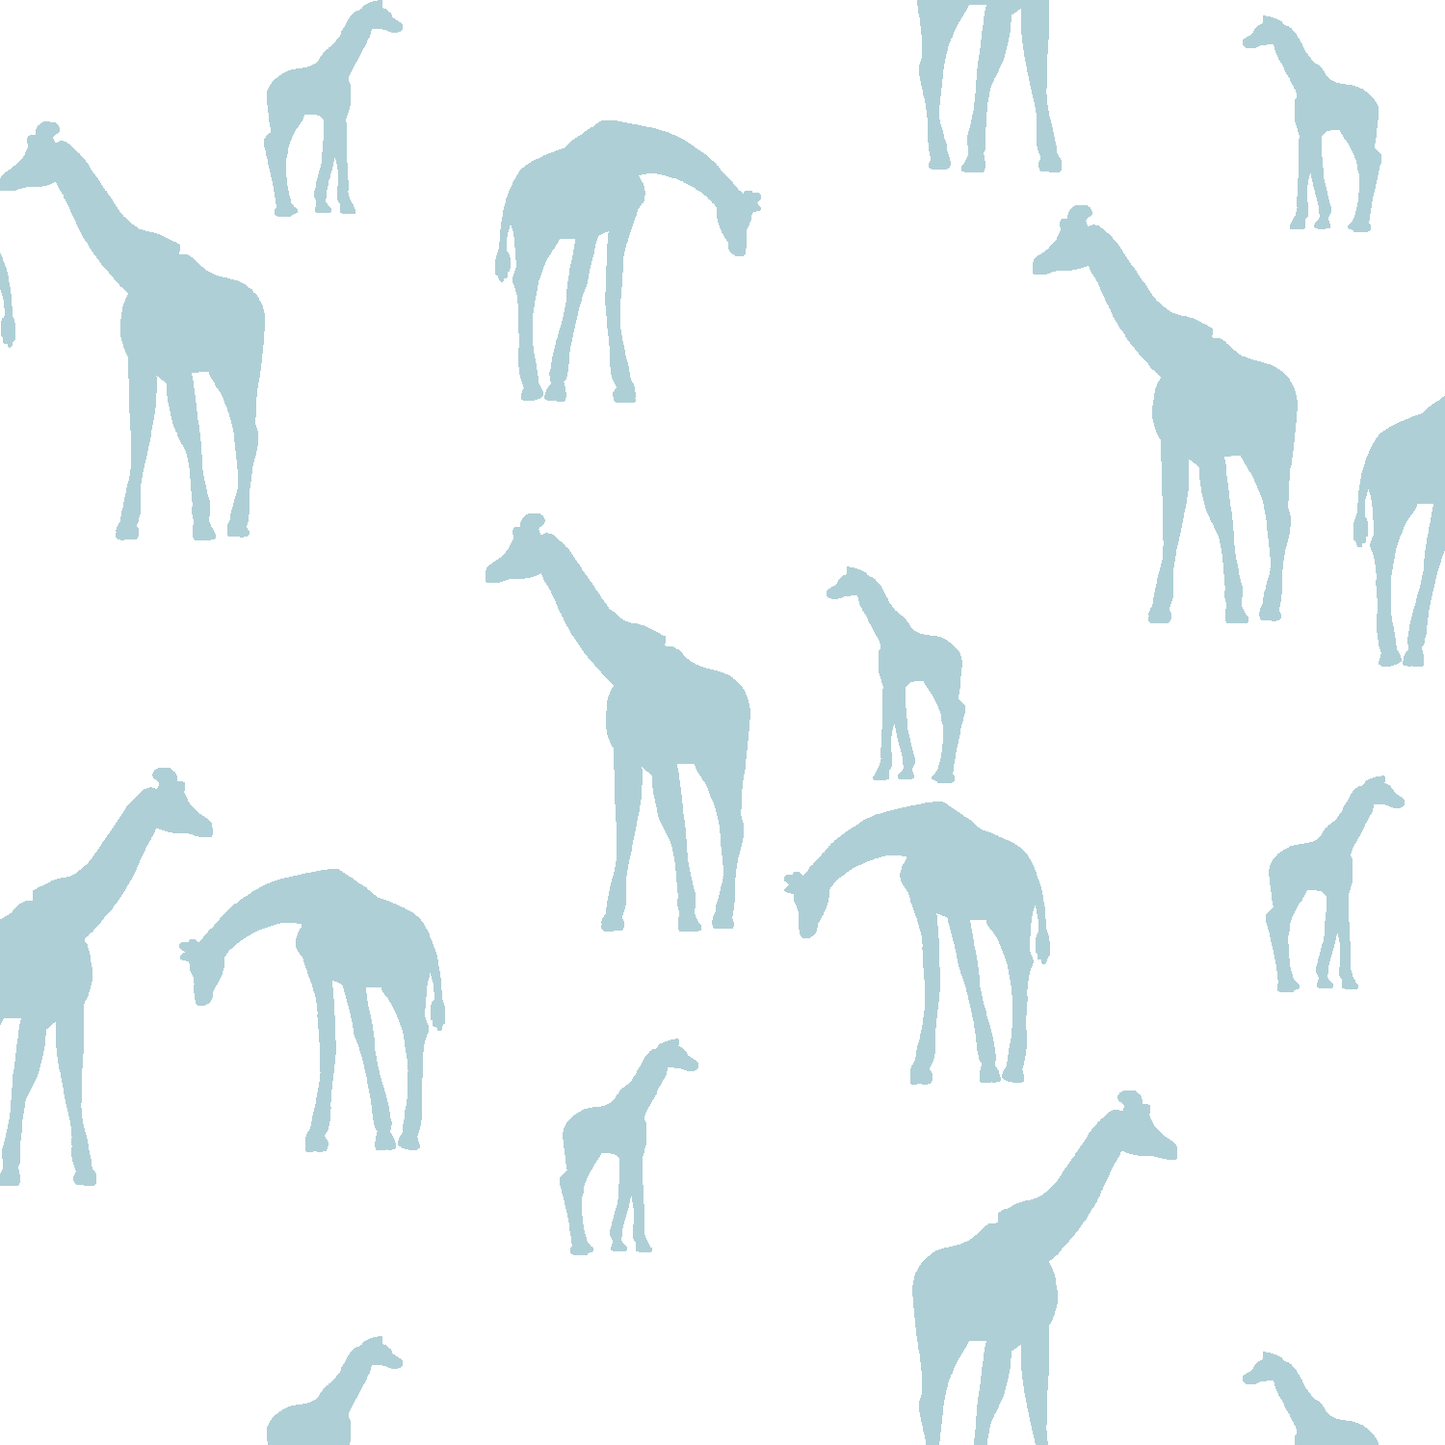 Giraffe Silhouette in Powder Blue on White